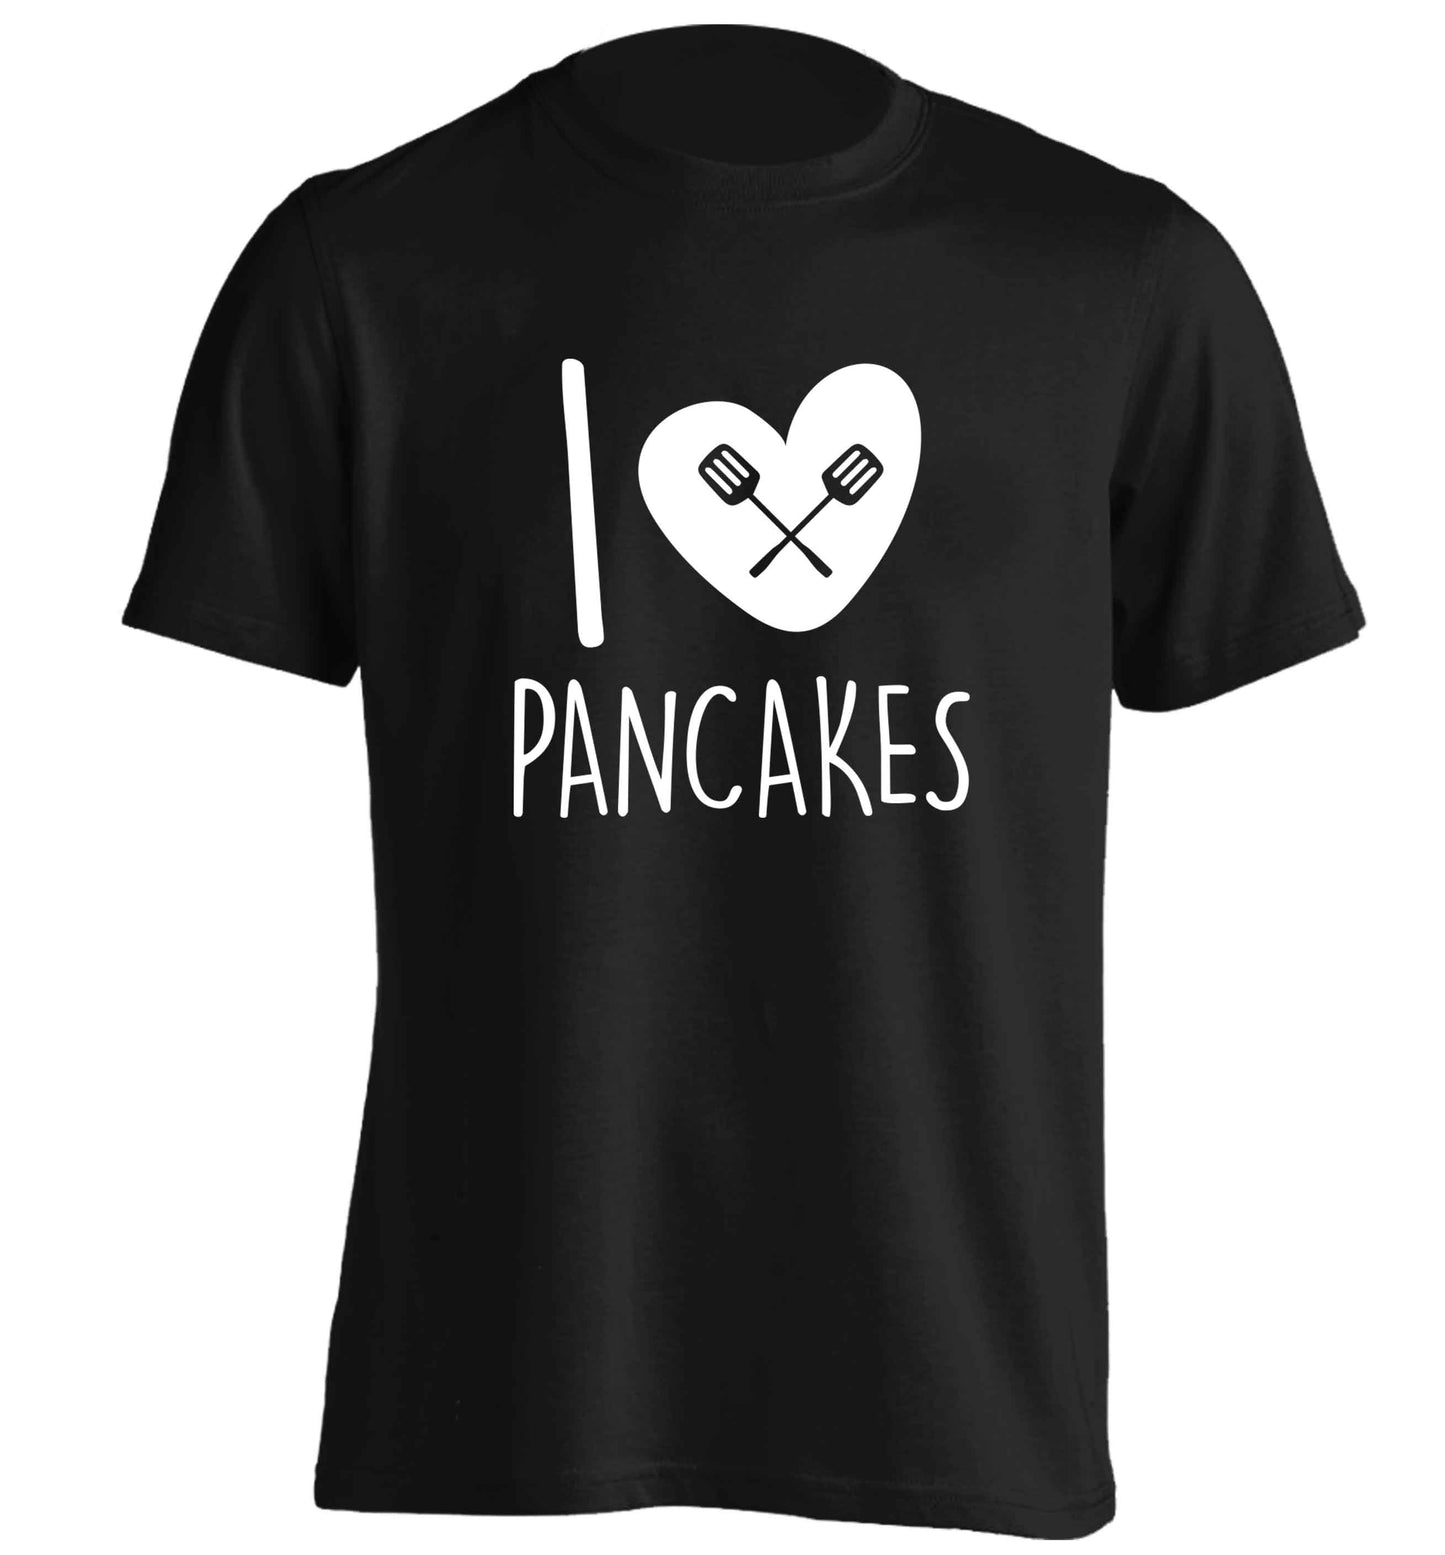 I love pancakes adults unisex black Tshirt 2XL